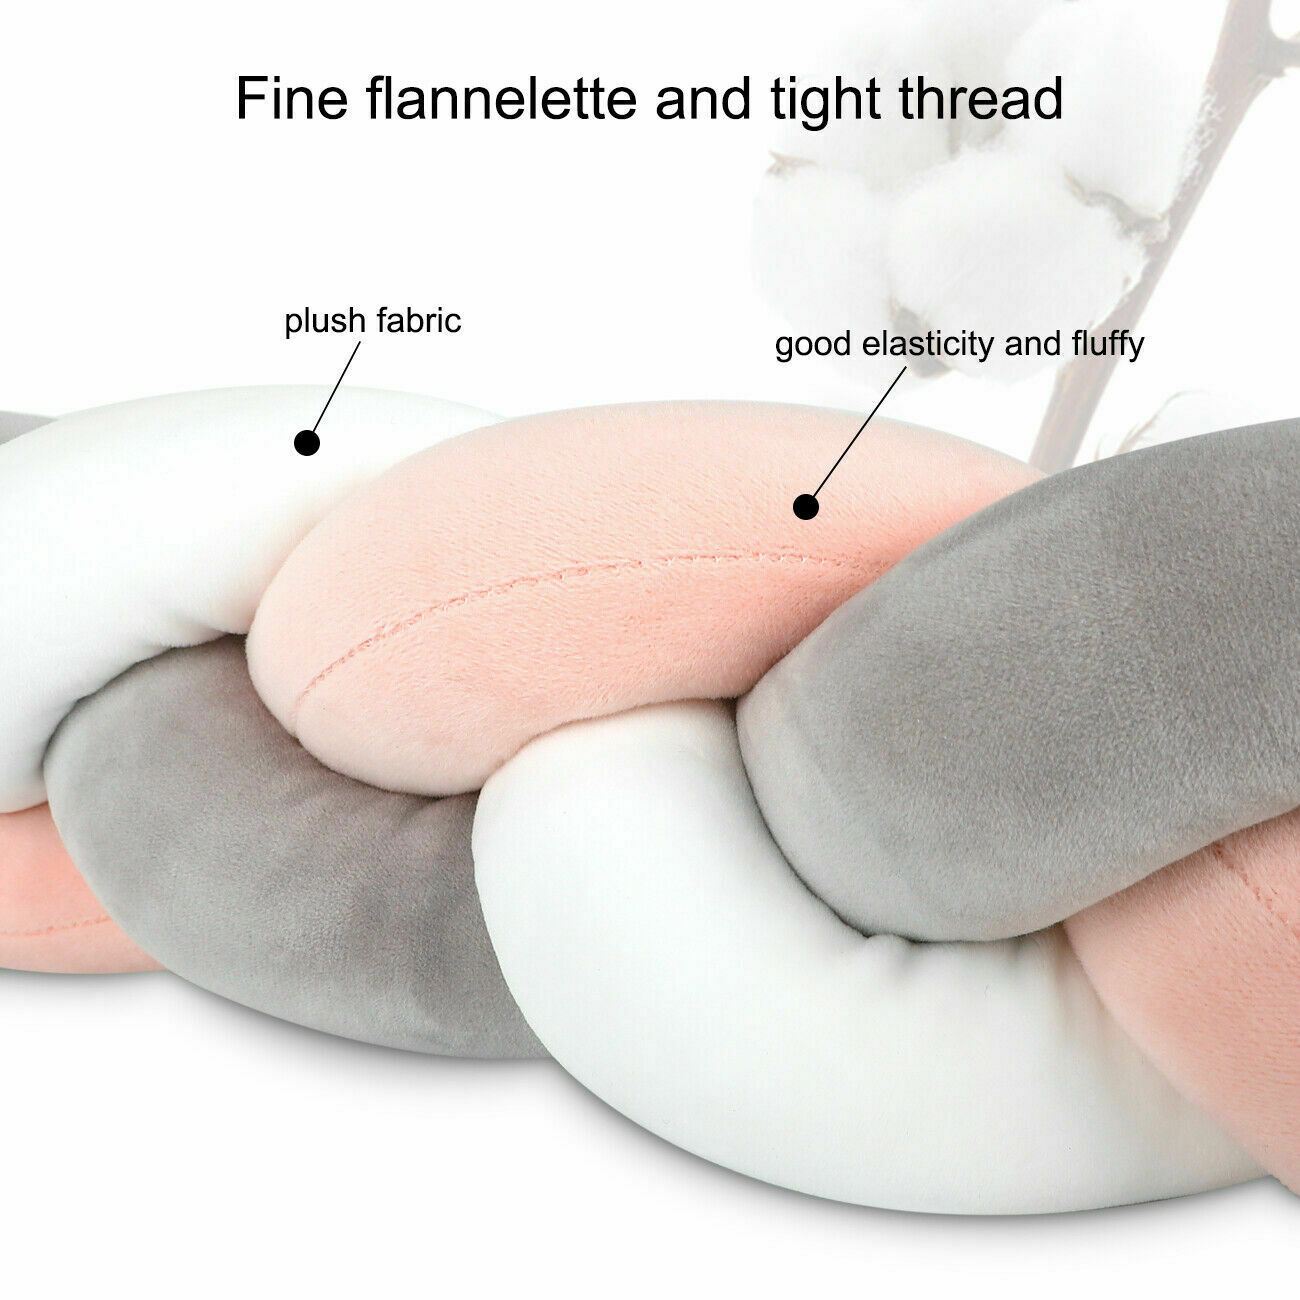 4M Kid Cot Bumper Braid Pillow Nursery Newborn Crib Bed Padded Protector Decor Gray+White+Pink - SILBERSHELL